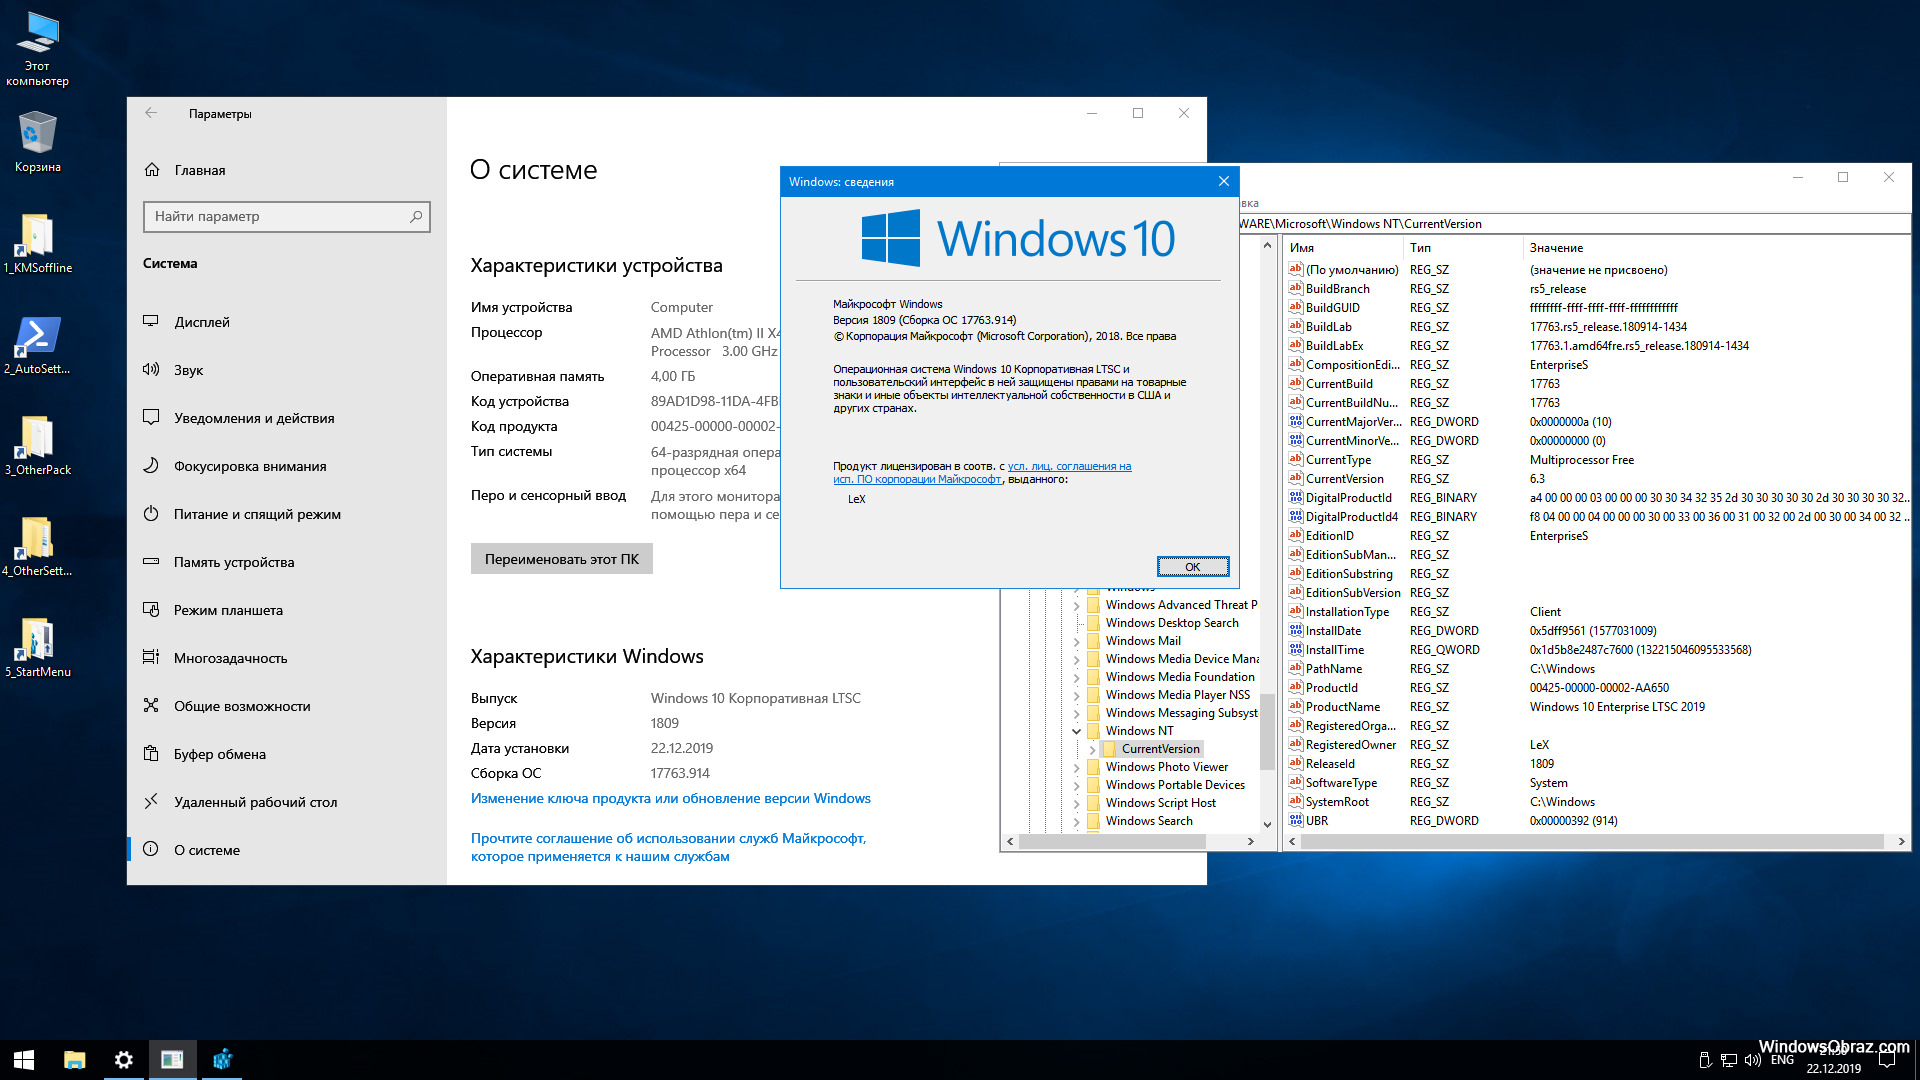 Виндовс 10 жесткие диски. Windows 10 Enterprise (корпоративная). Винда 10. Редакции виндовс 10. Система виндовс 10.